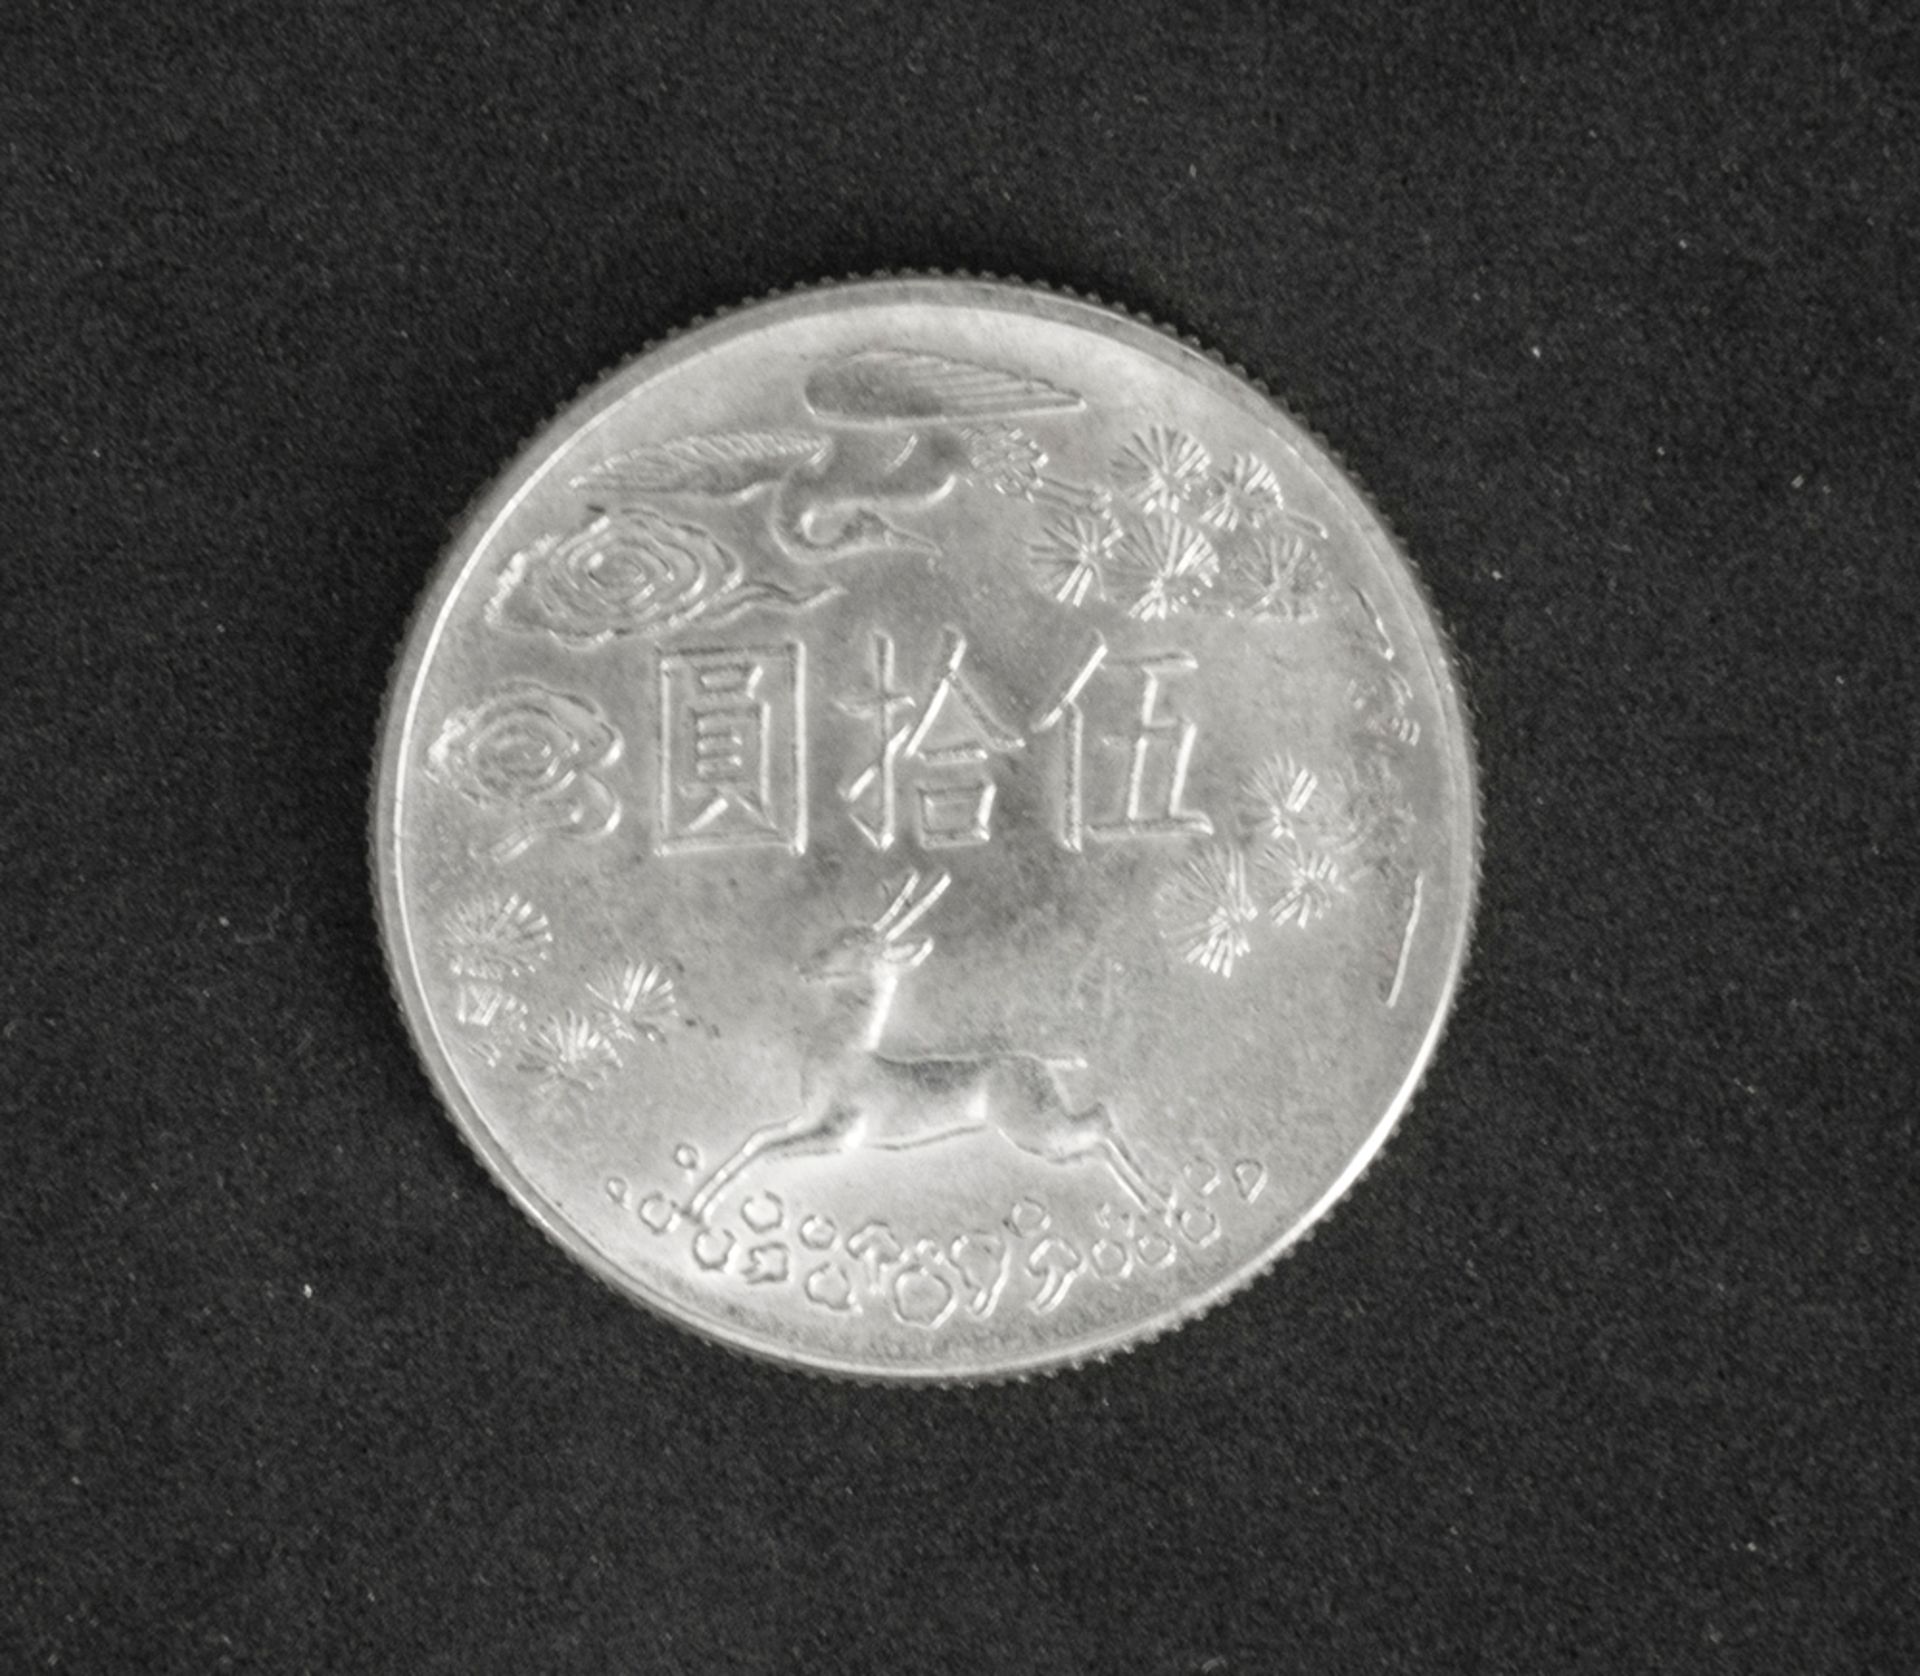 Taiwan 1965, 50 Dollar - Silbermünze. Erhaltung: ss. - Bild 2 aus 2